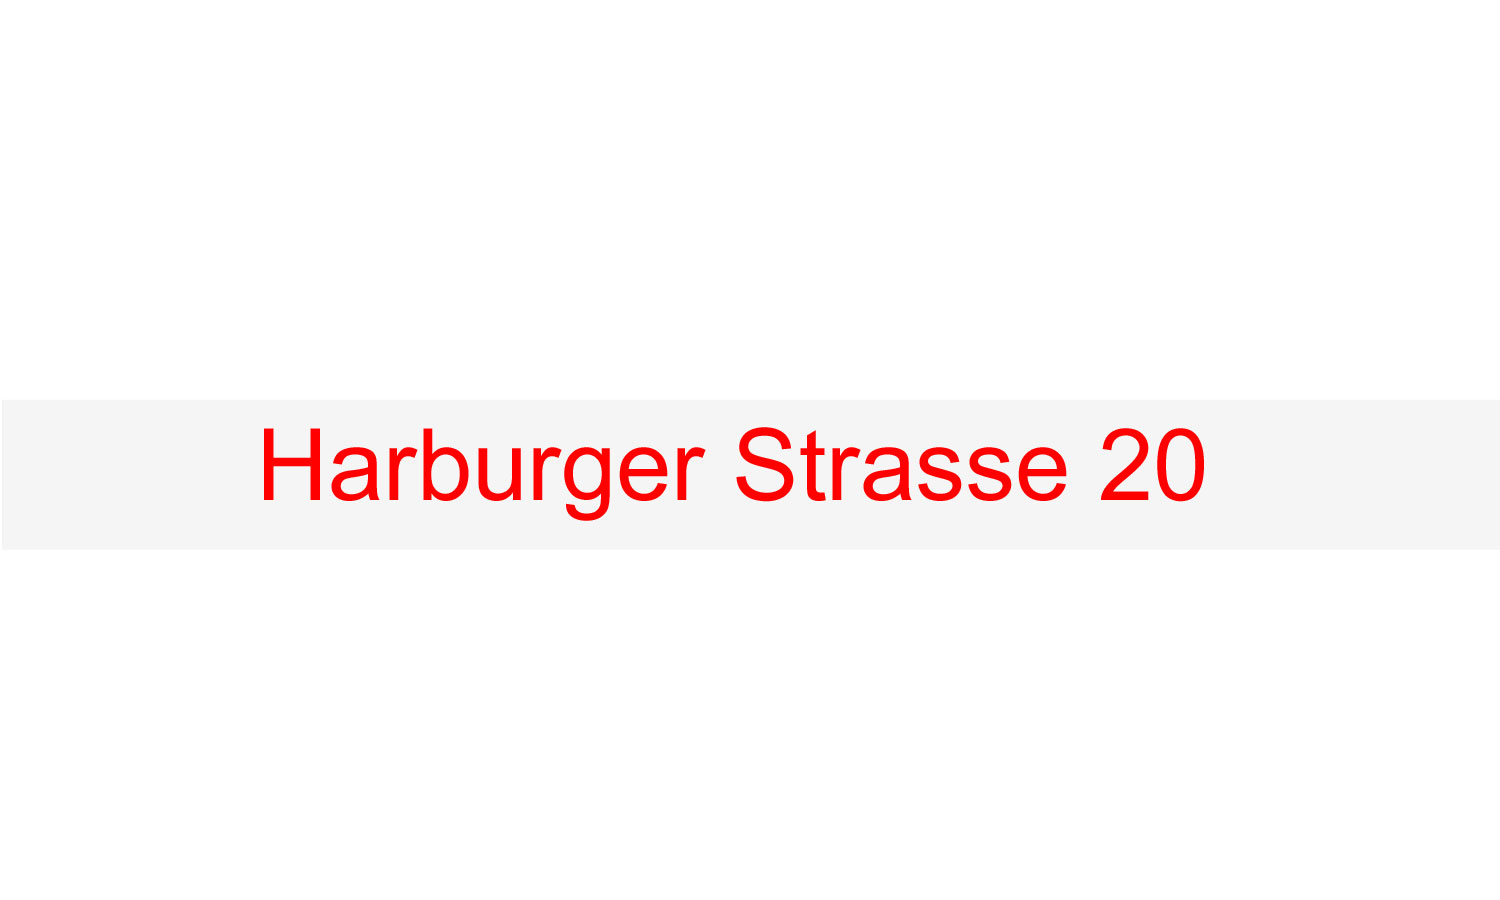 Harburger Strasse 20